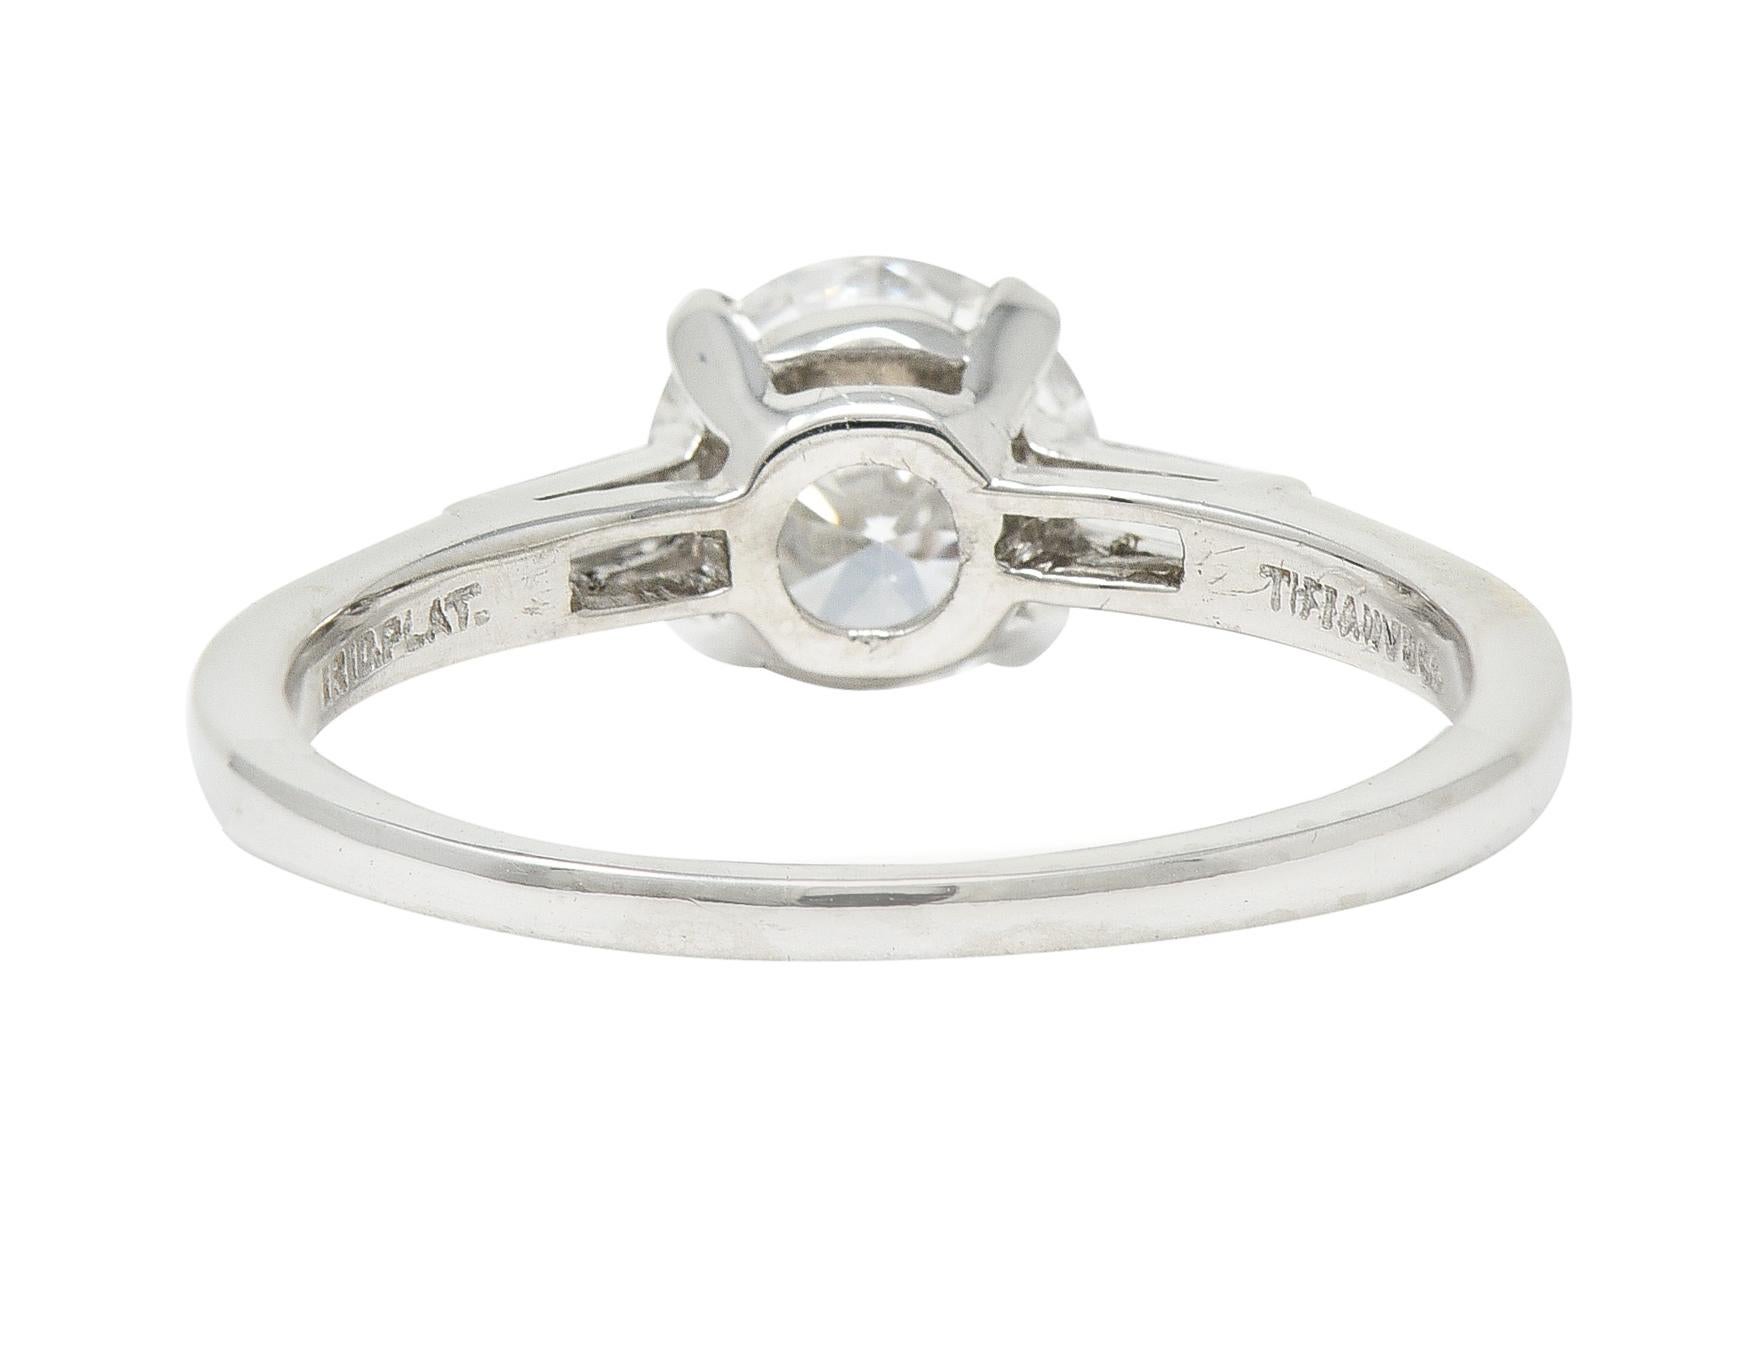 Brilliant Cut Tiffany & Co. 1.35 Carats Diamond Platinum Engagement Ring GIA